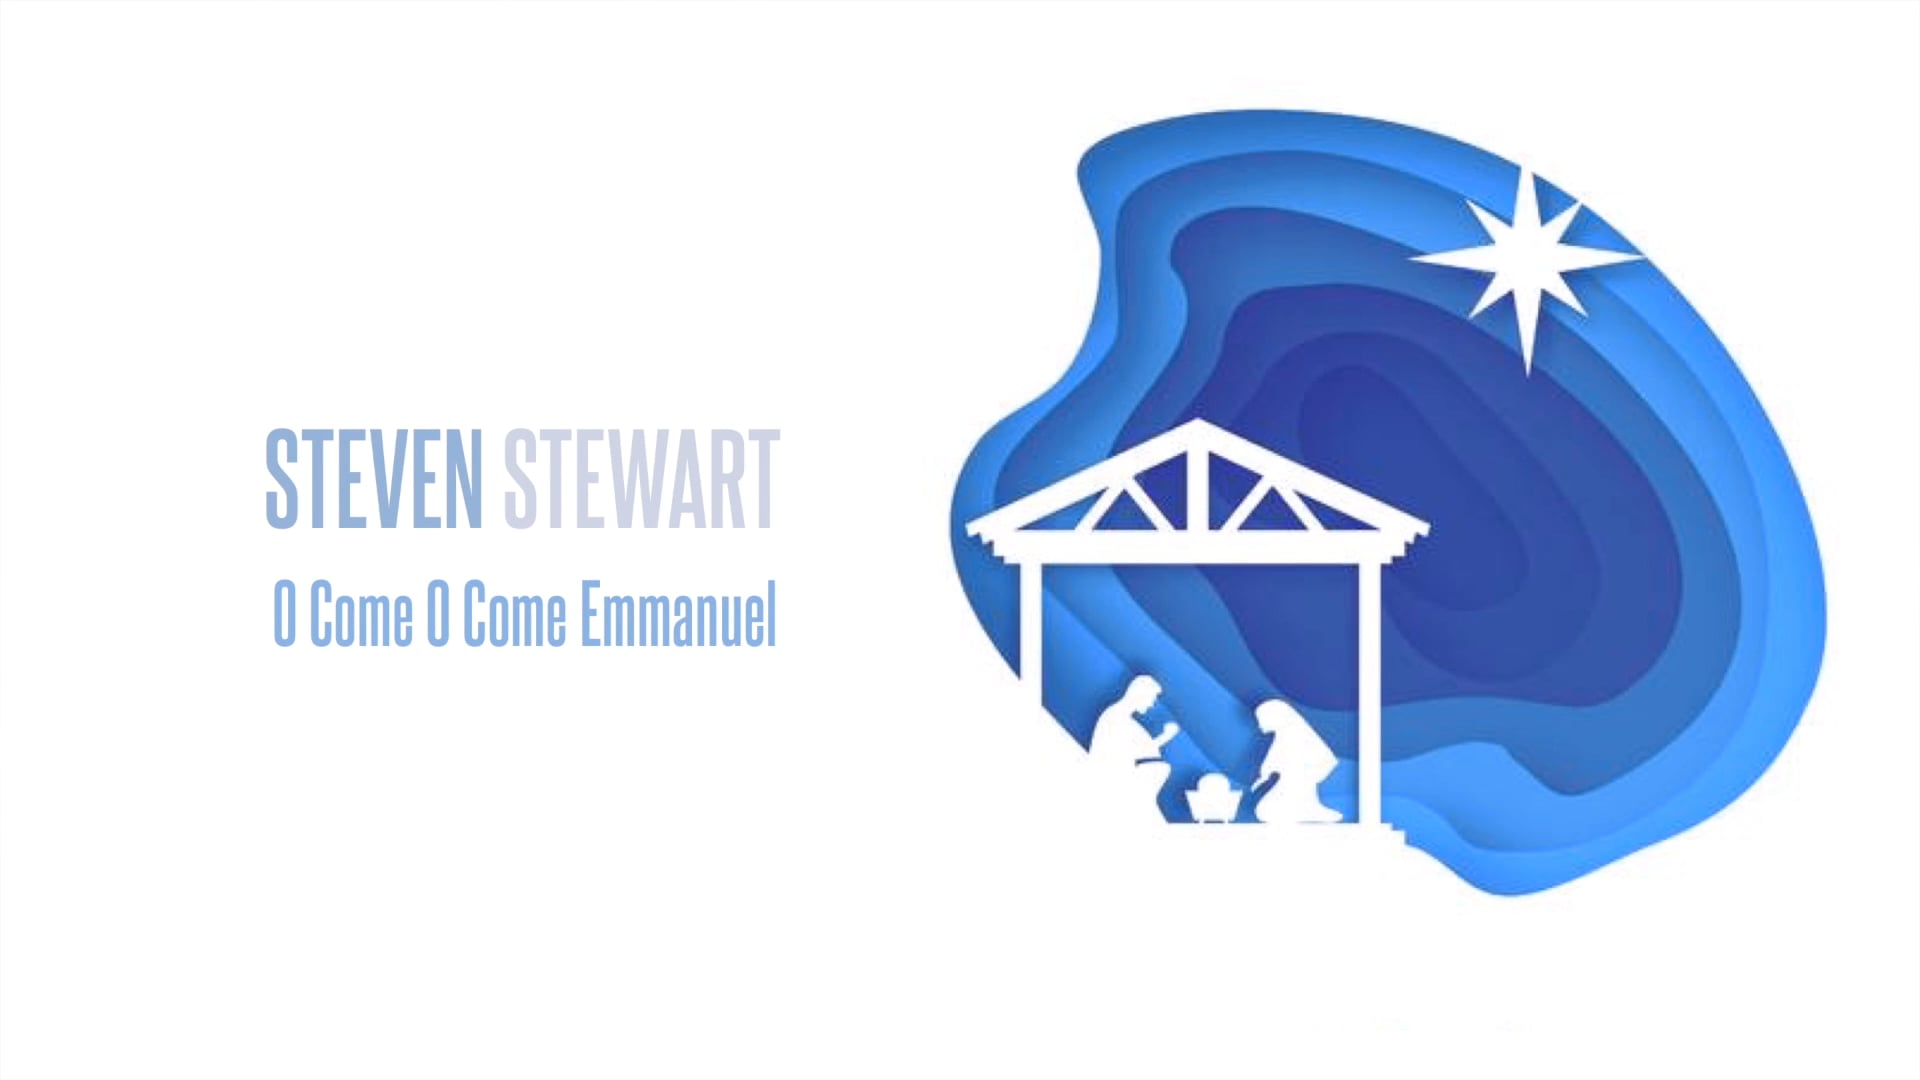 O Come, O Come Emmanuel - Steven Stewart (Christmas)